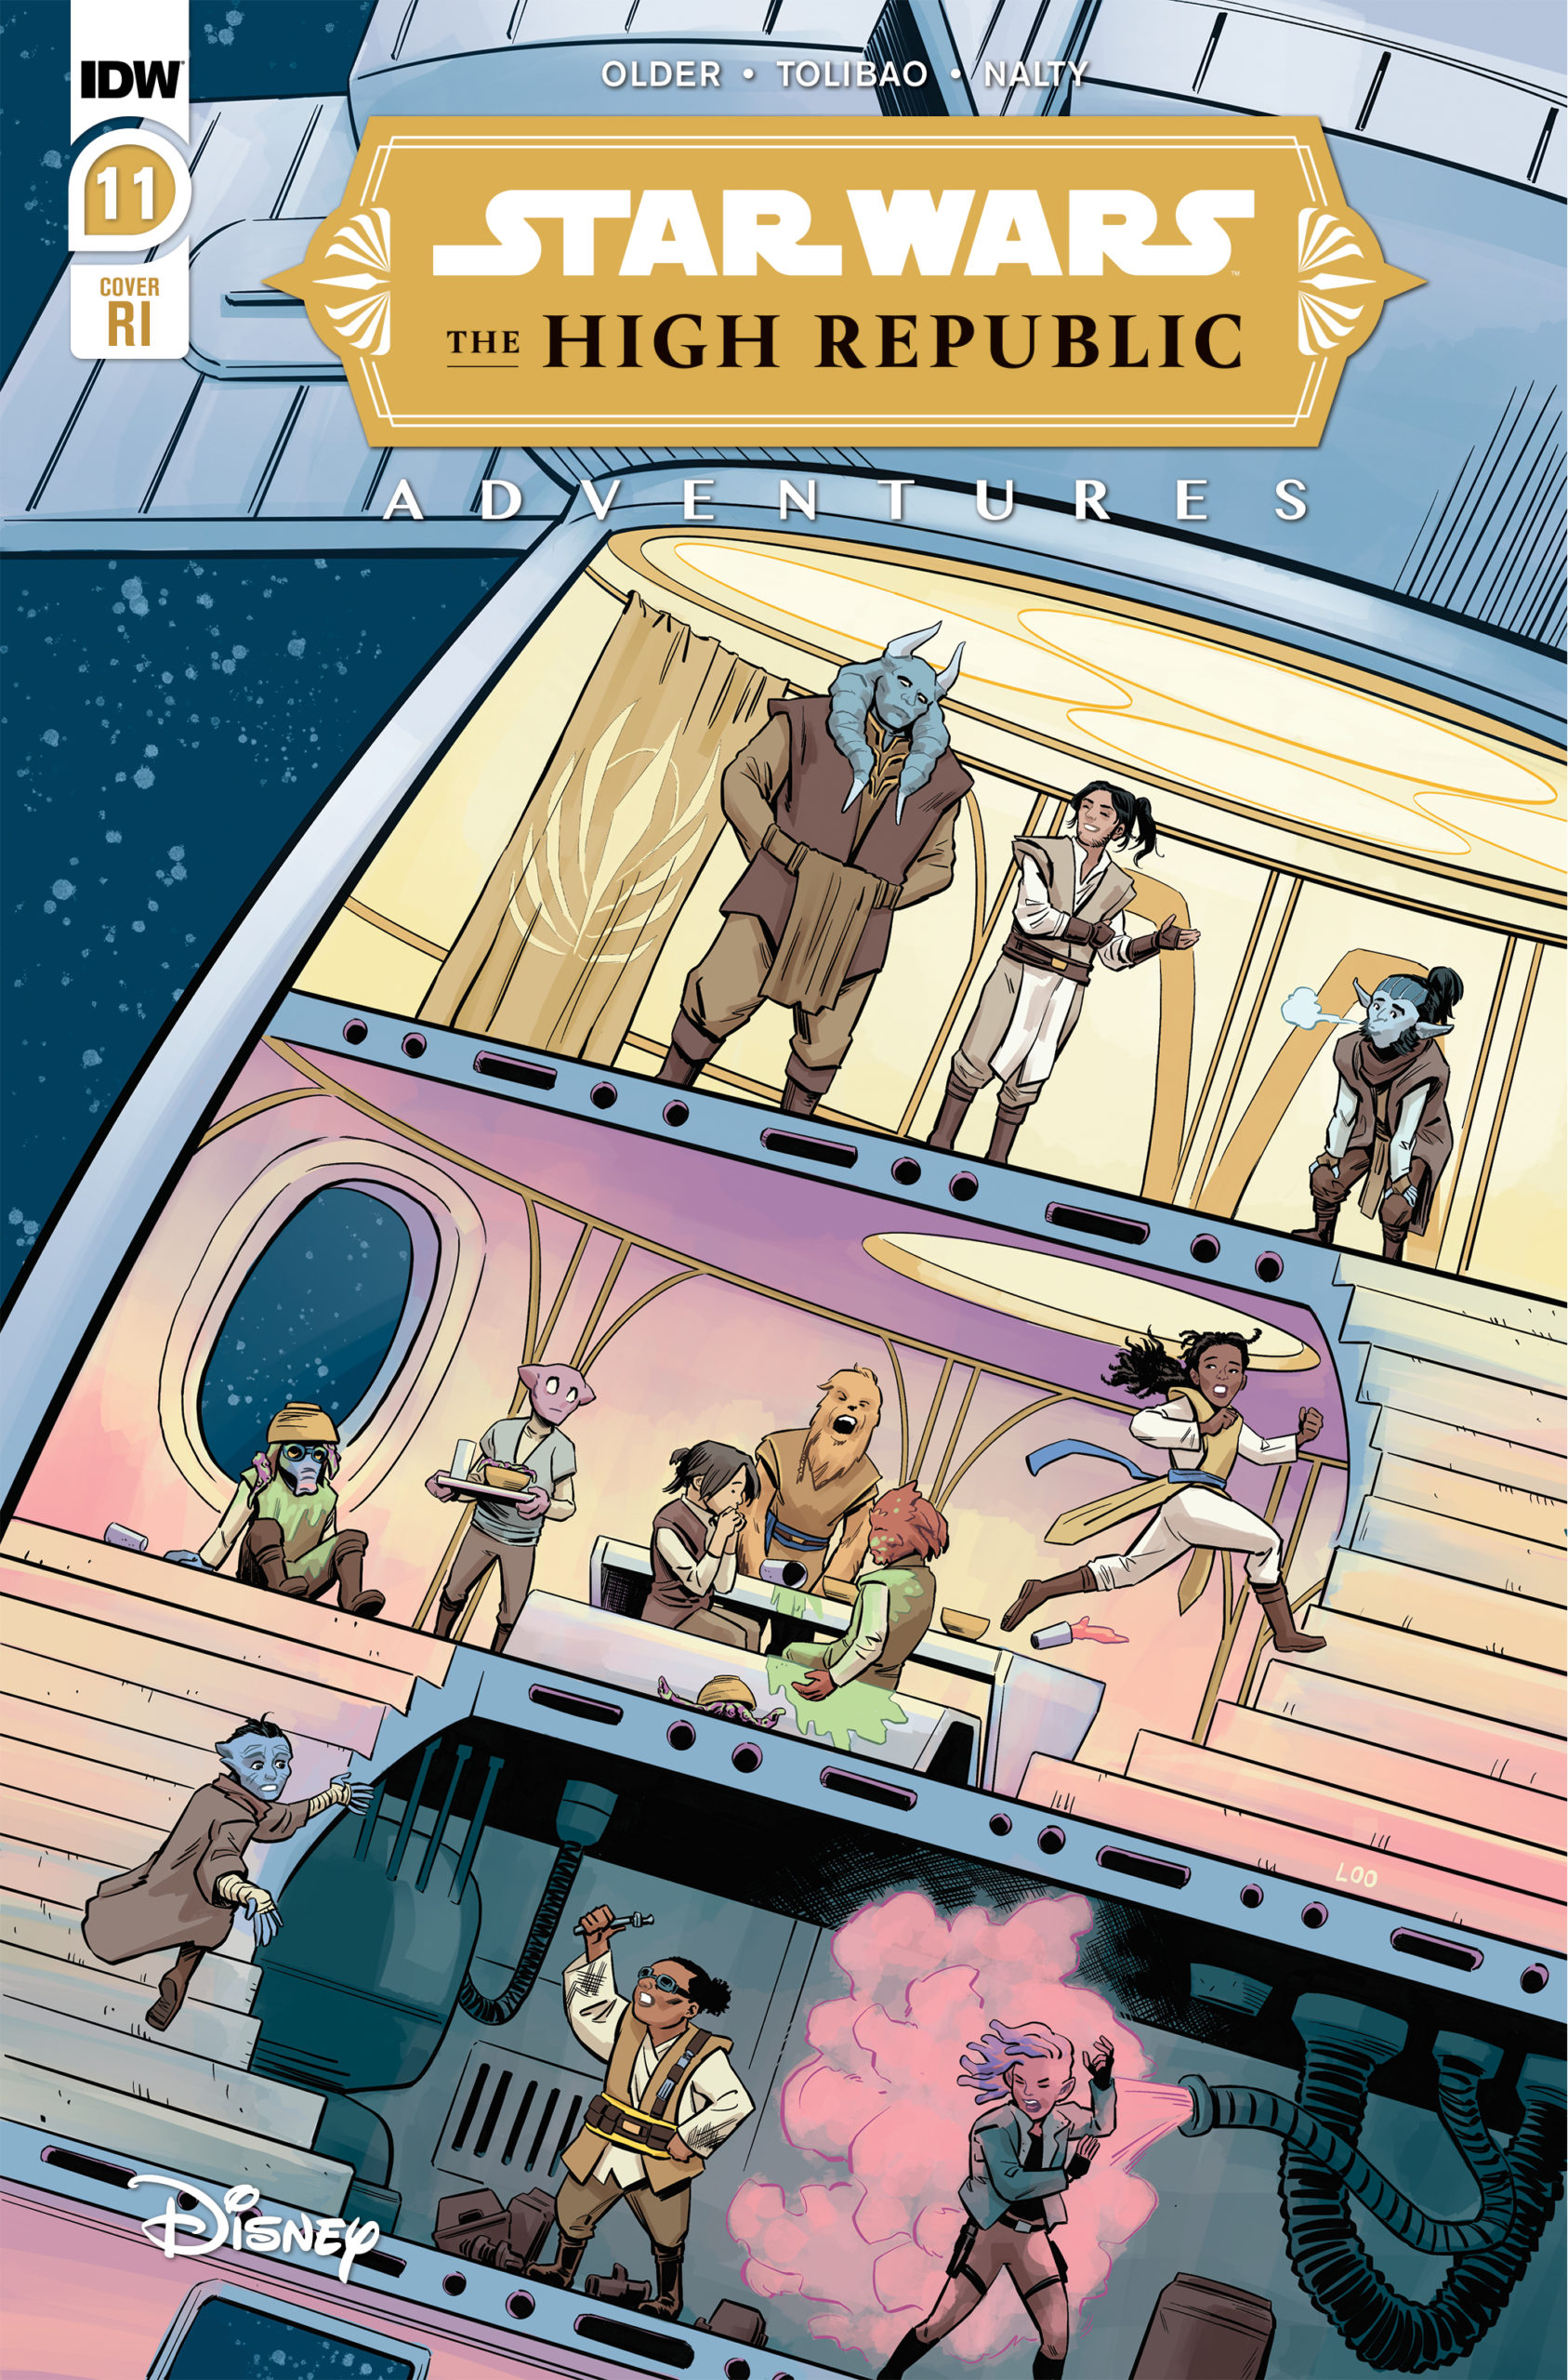 The High Republic Adventures #11 (Jason Loo Variant Cover) (01.12.2021)